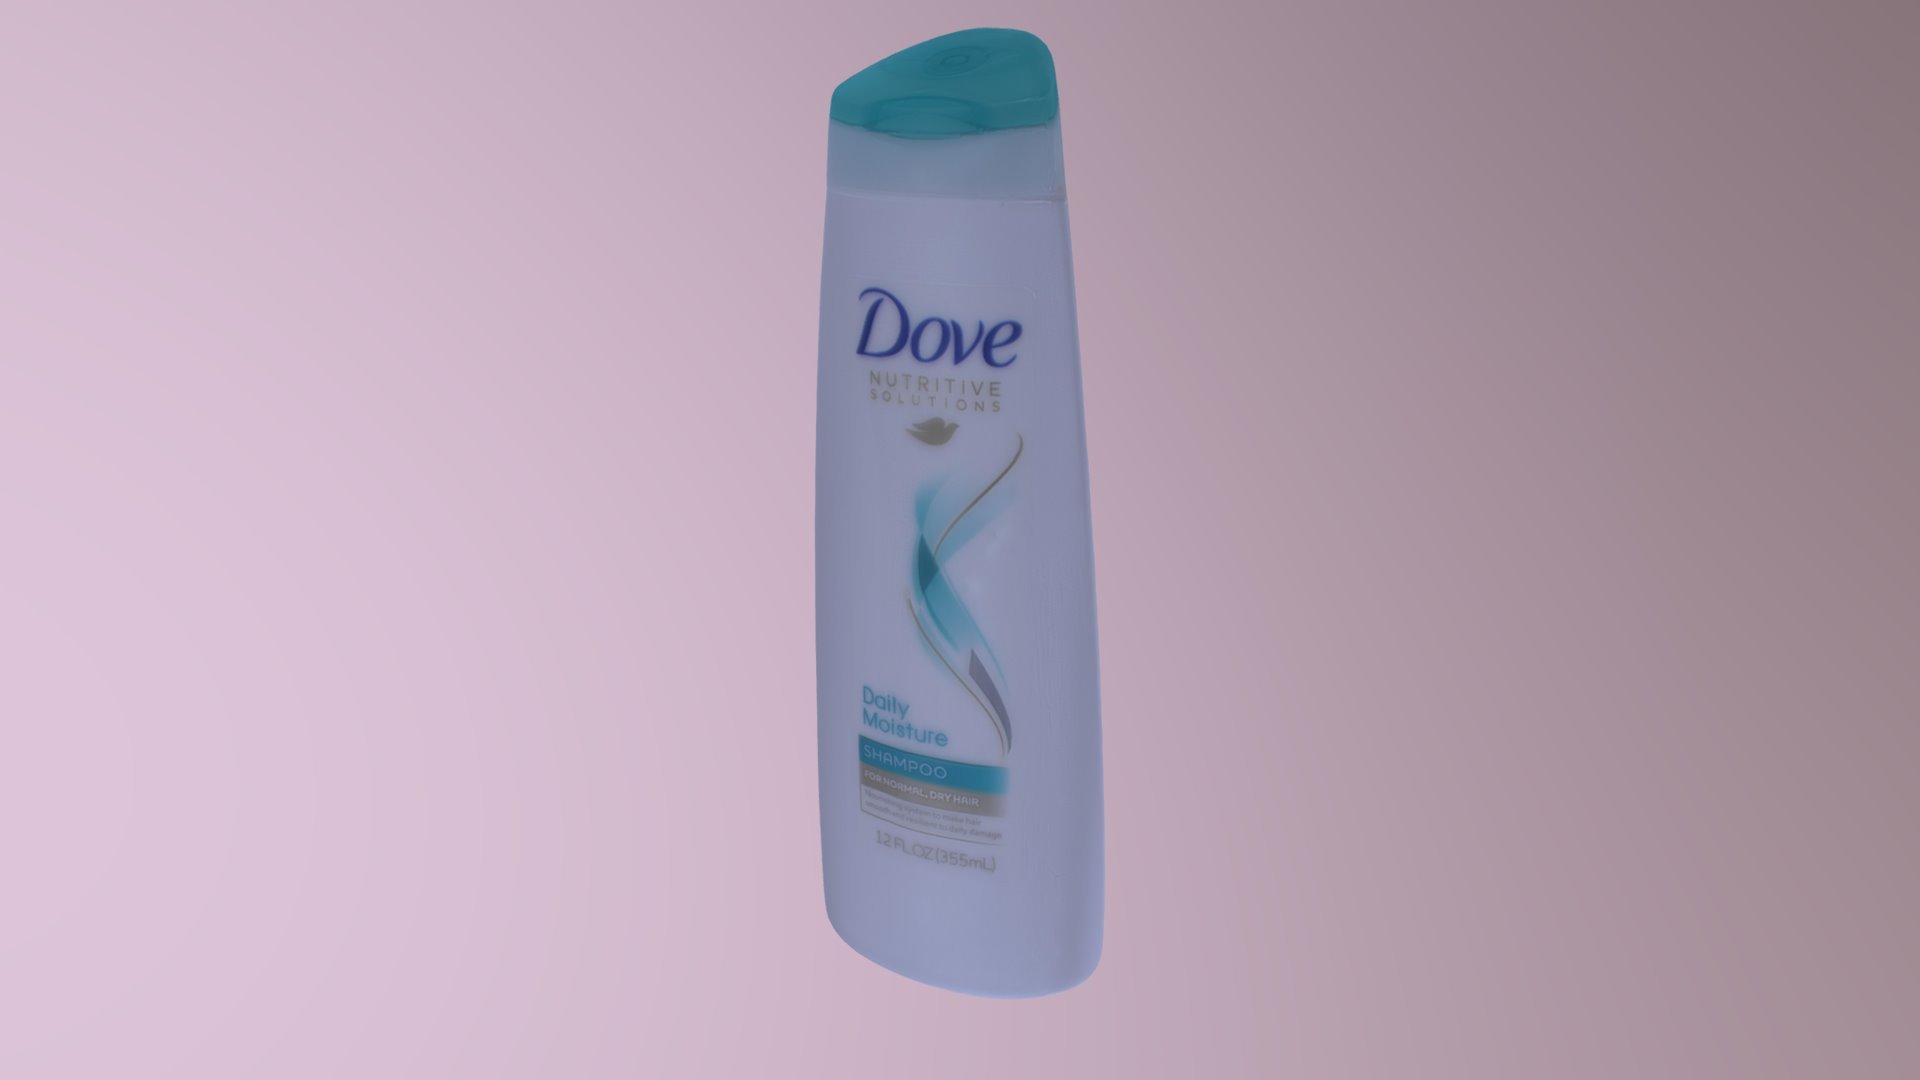 software:agisoft photo scan, camera:nikon D5300 - Dove shampoo - 3D model by saririam 3d model